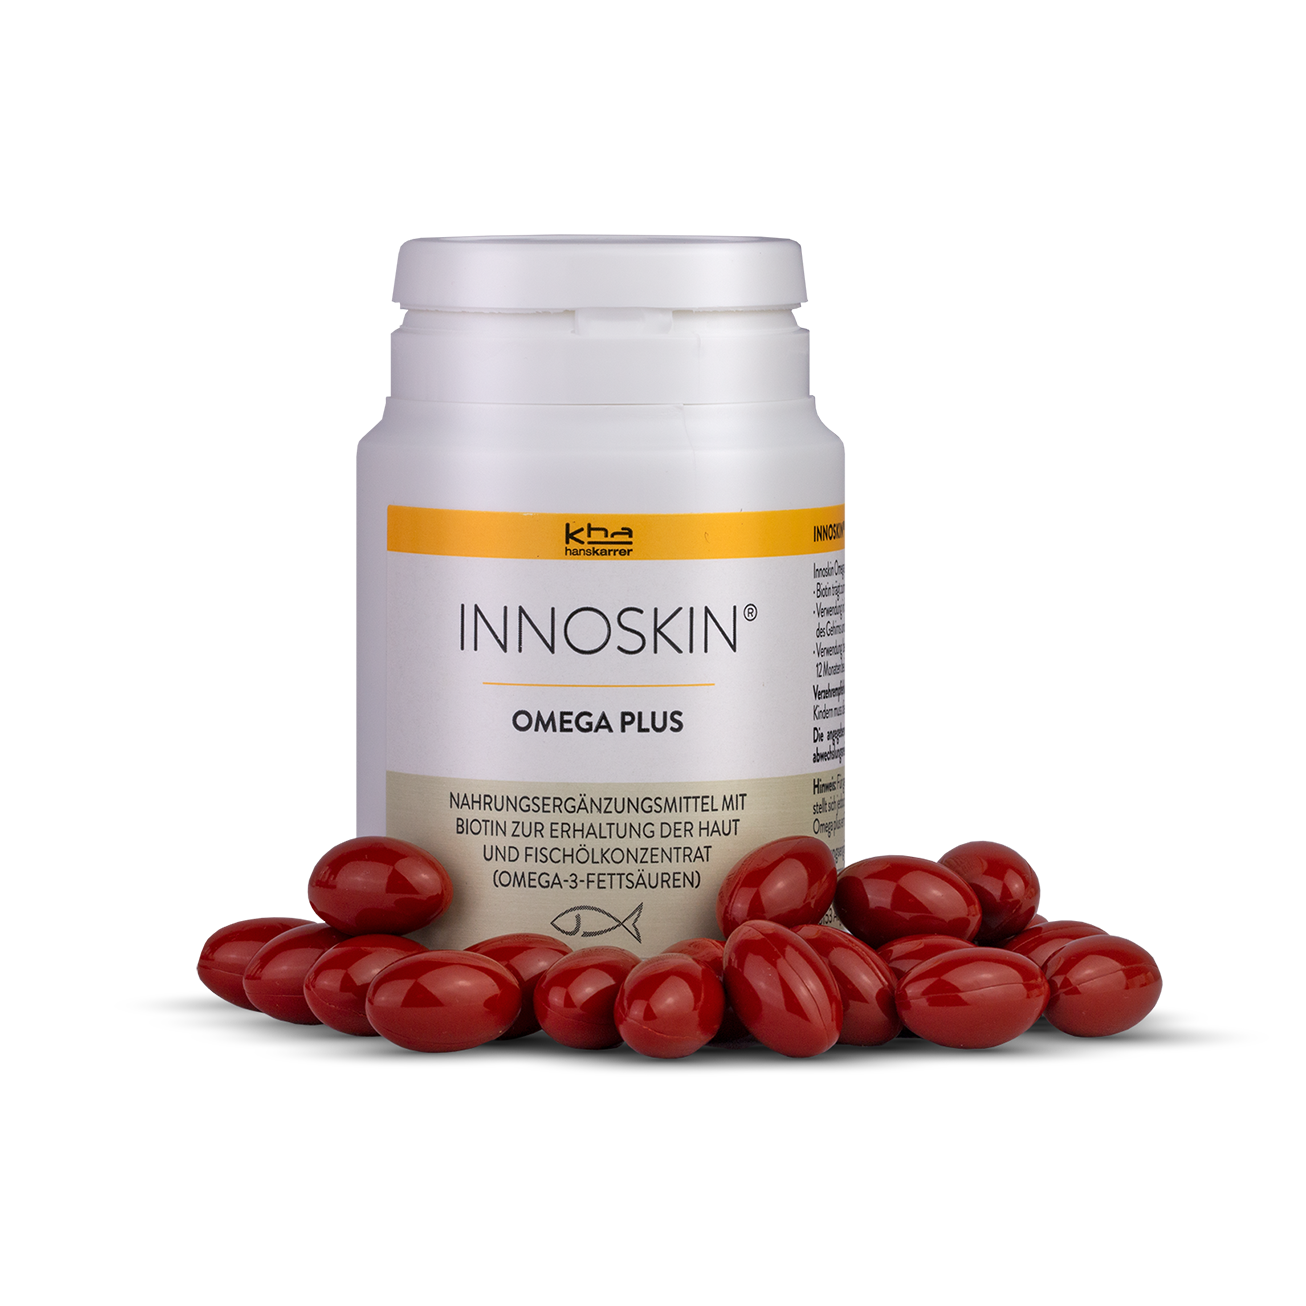 Abbildung des Hautpflege Produkts "Innoskin® Omega plus"